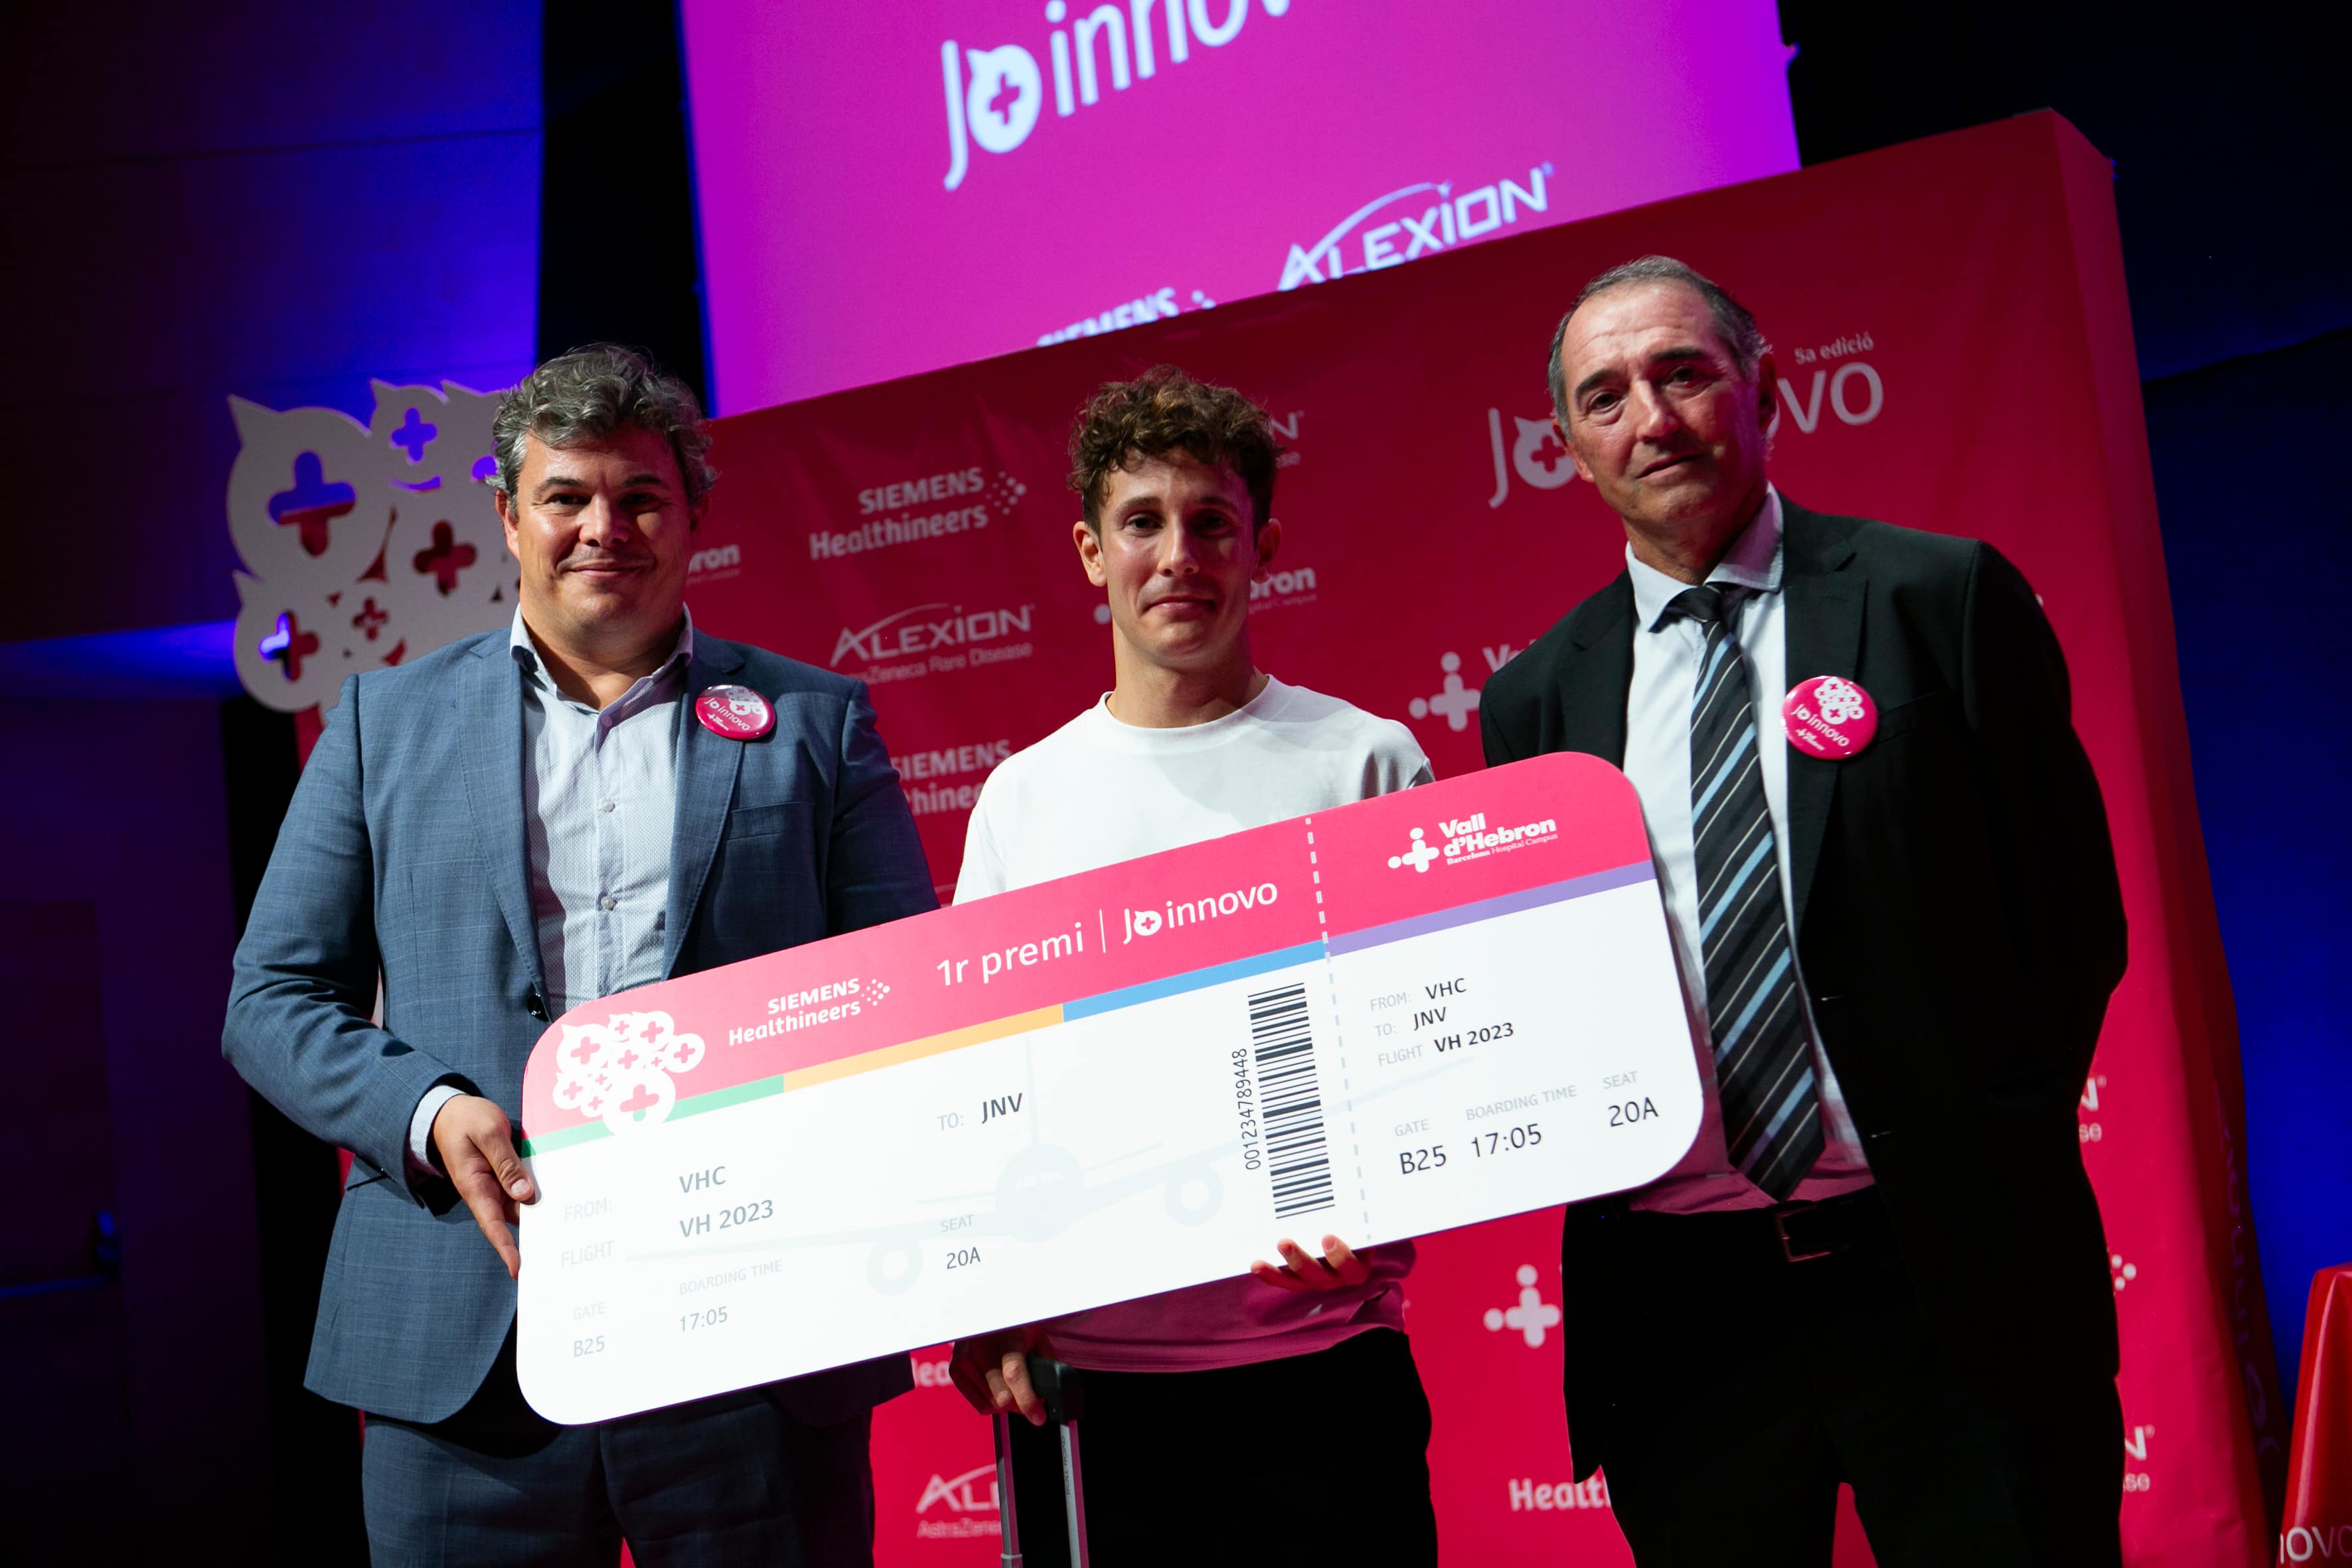 Marc Mendo gana el premio Jo innovo 2023